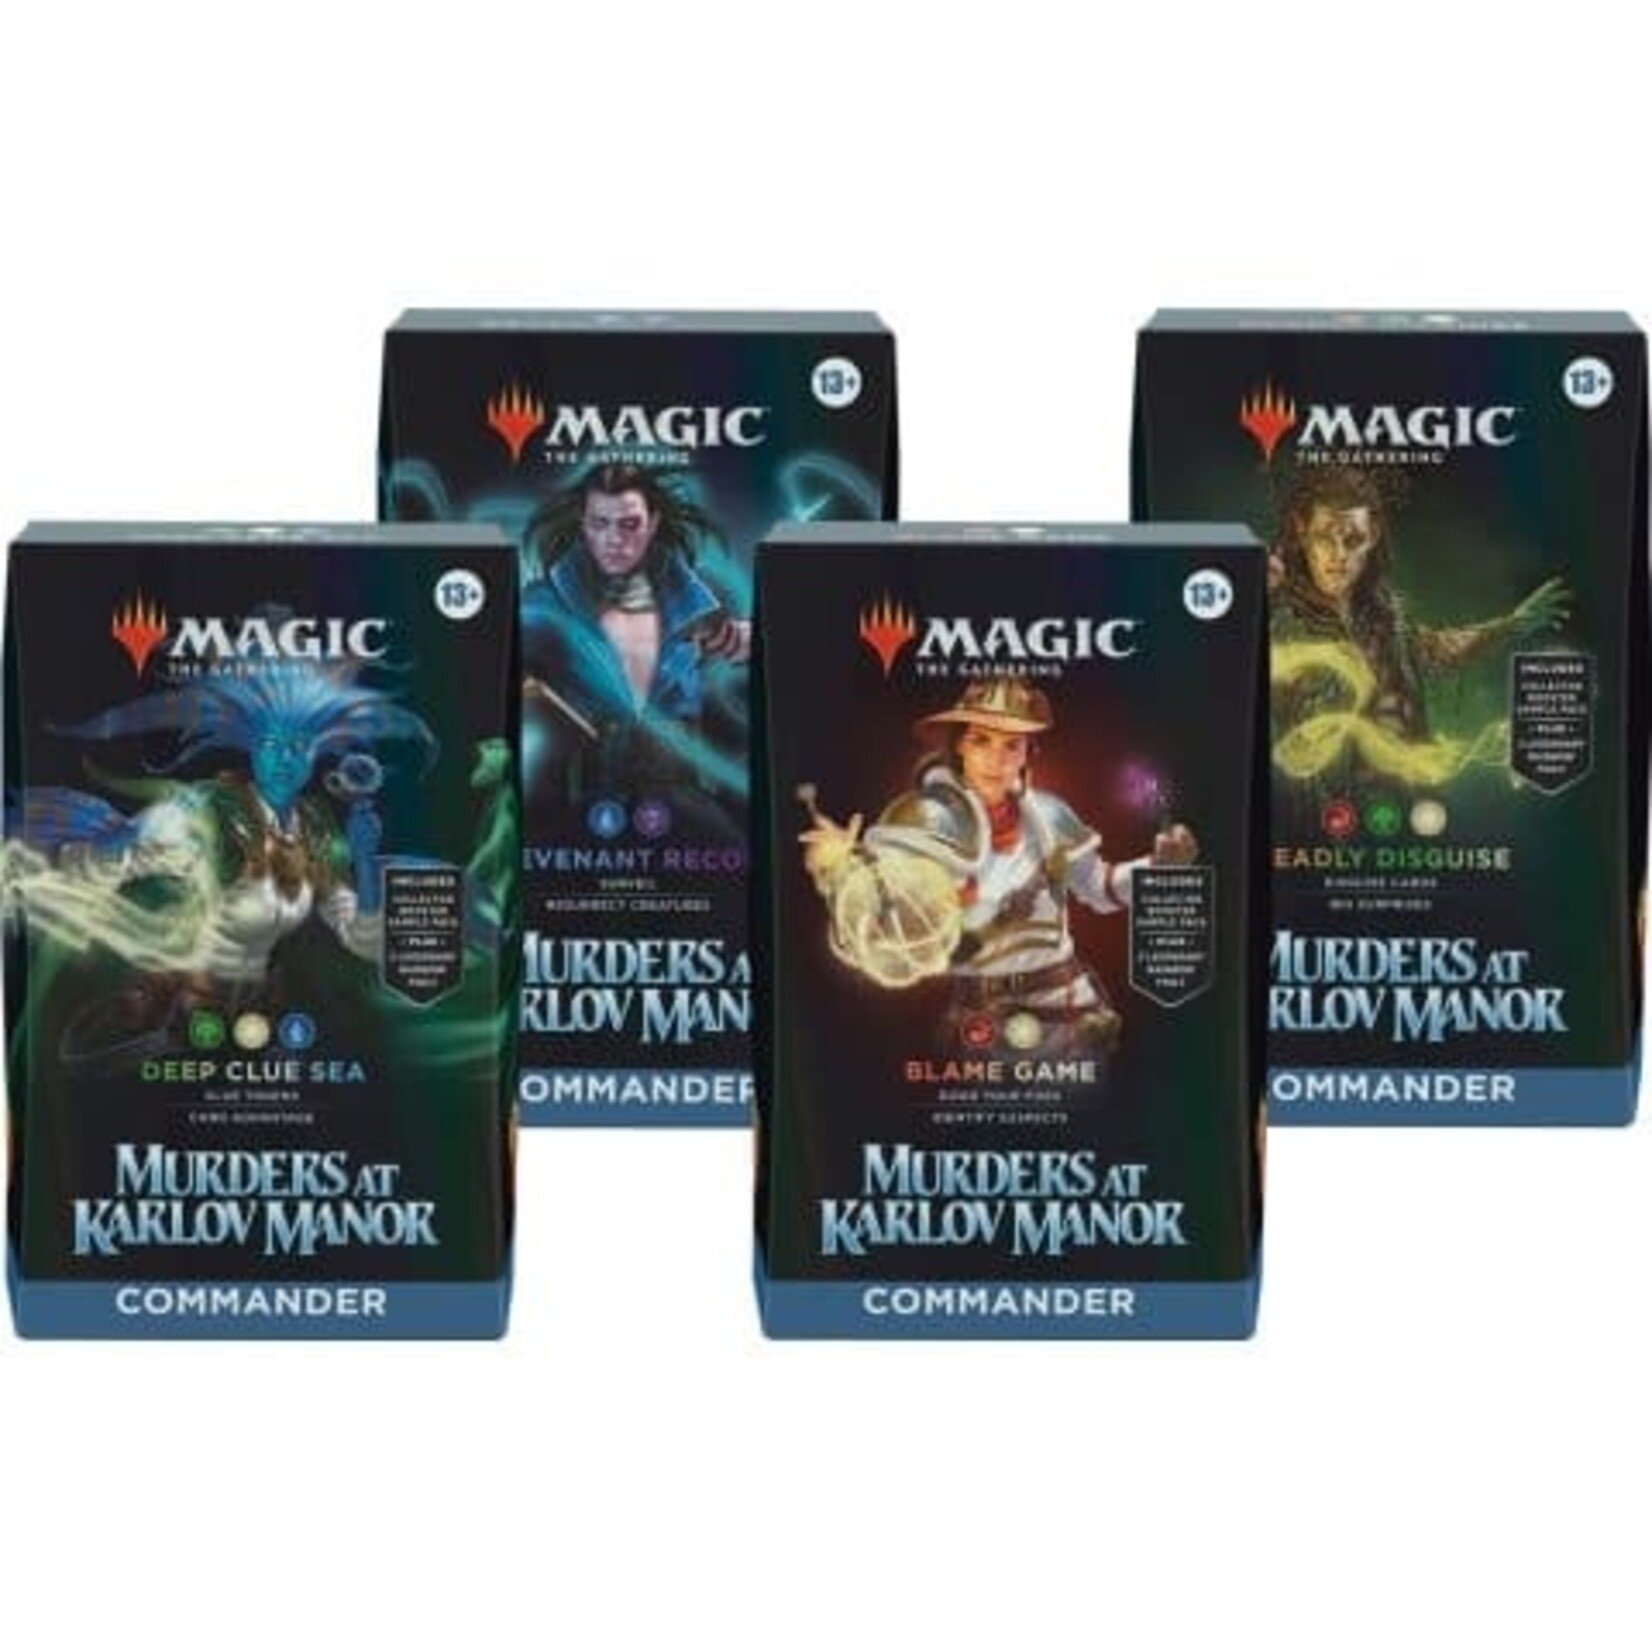 Magic the gathering Murders at Karlov Manor - Commander Deck Set ( 4 decks ) -